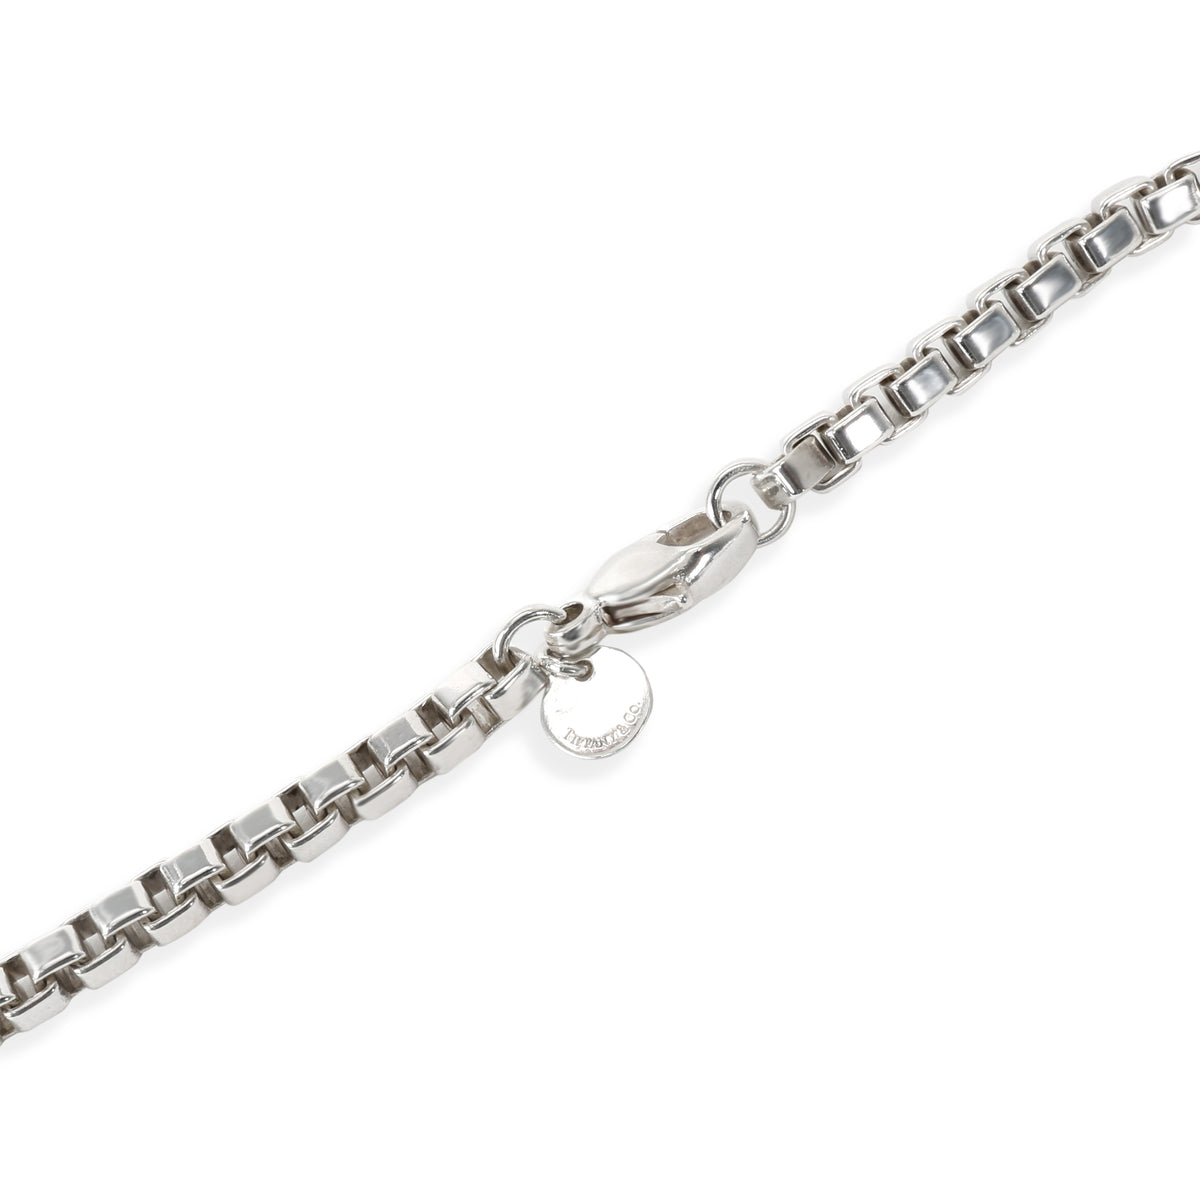 Tiffany & Co. Venetian Link Necklace in  Sterling Silver